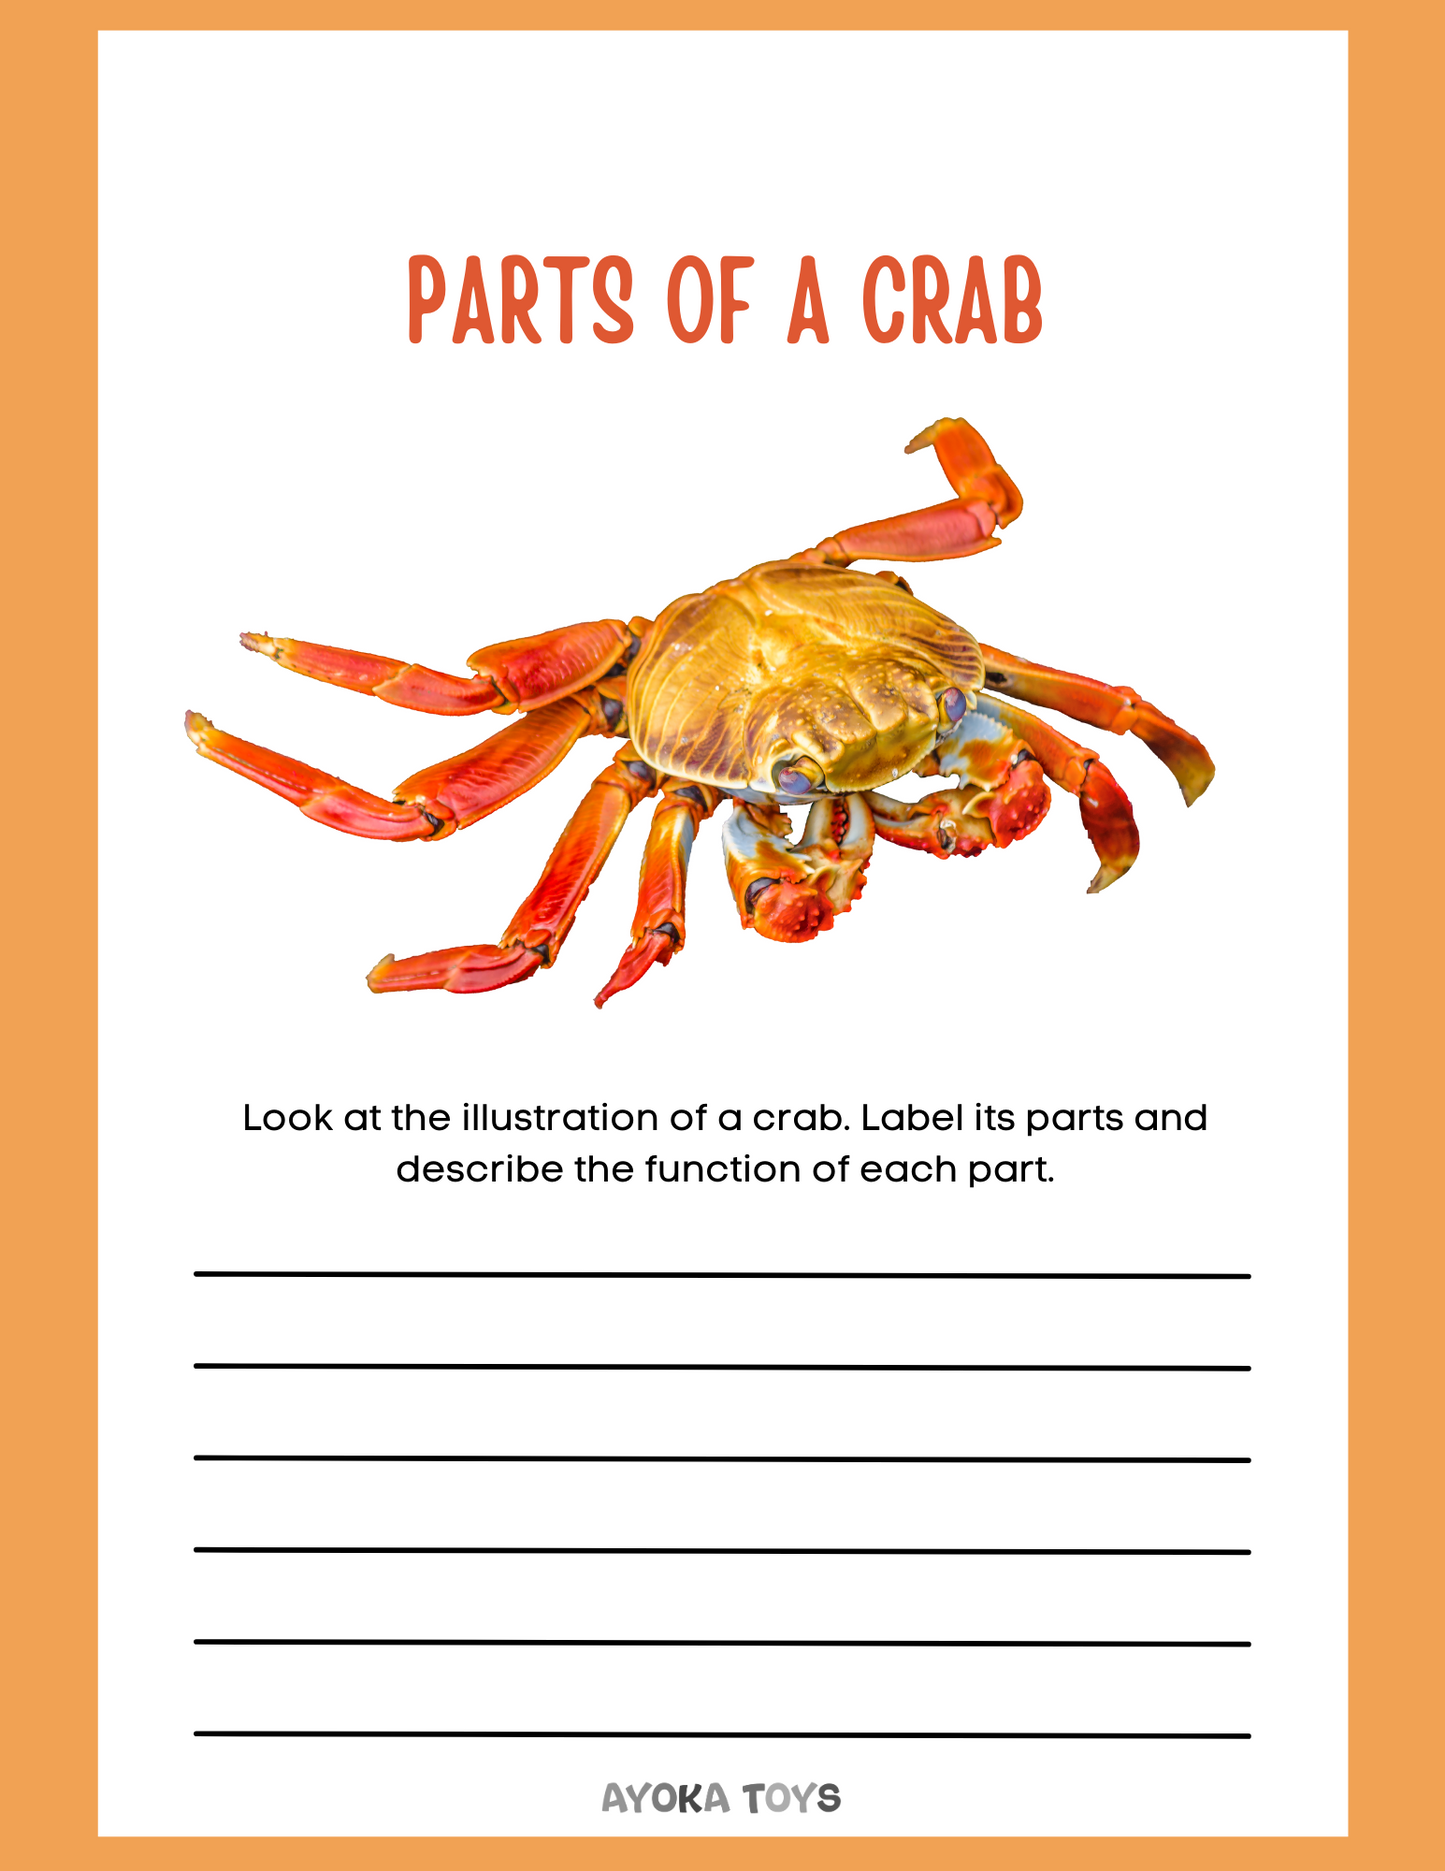 Animal Research - Crab